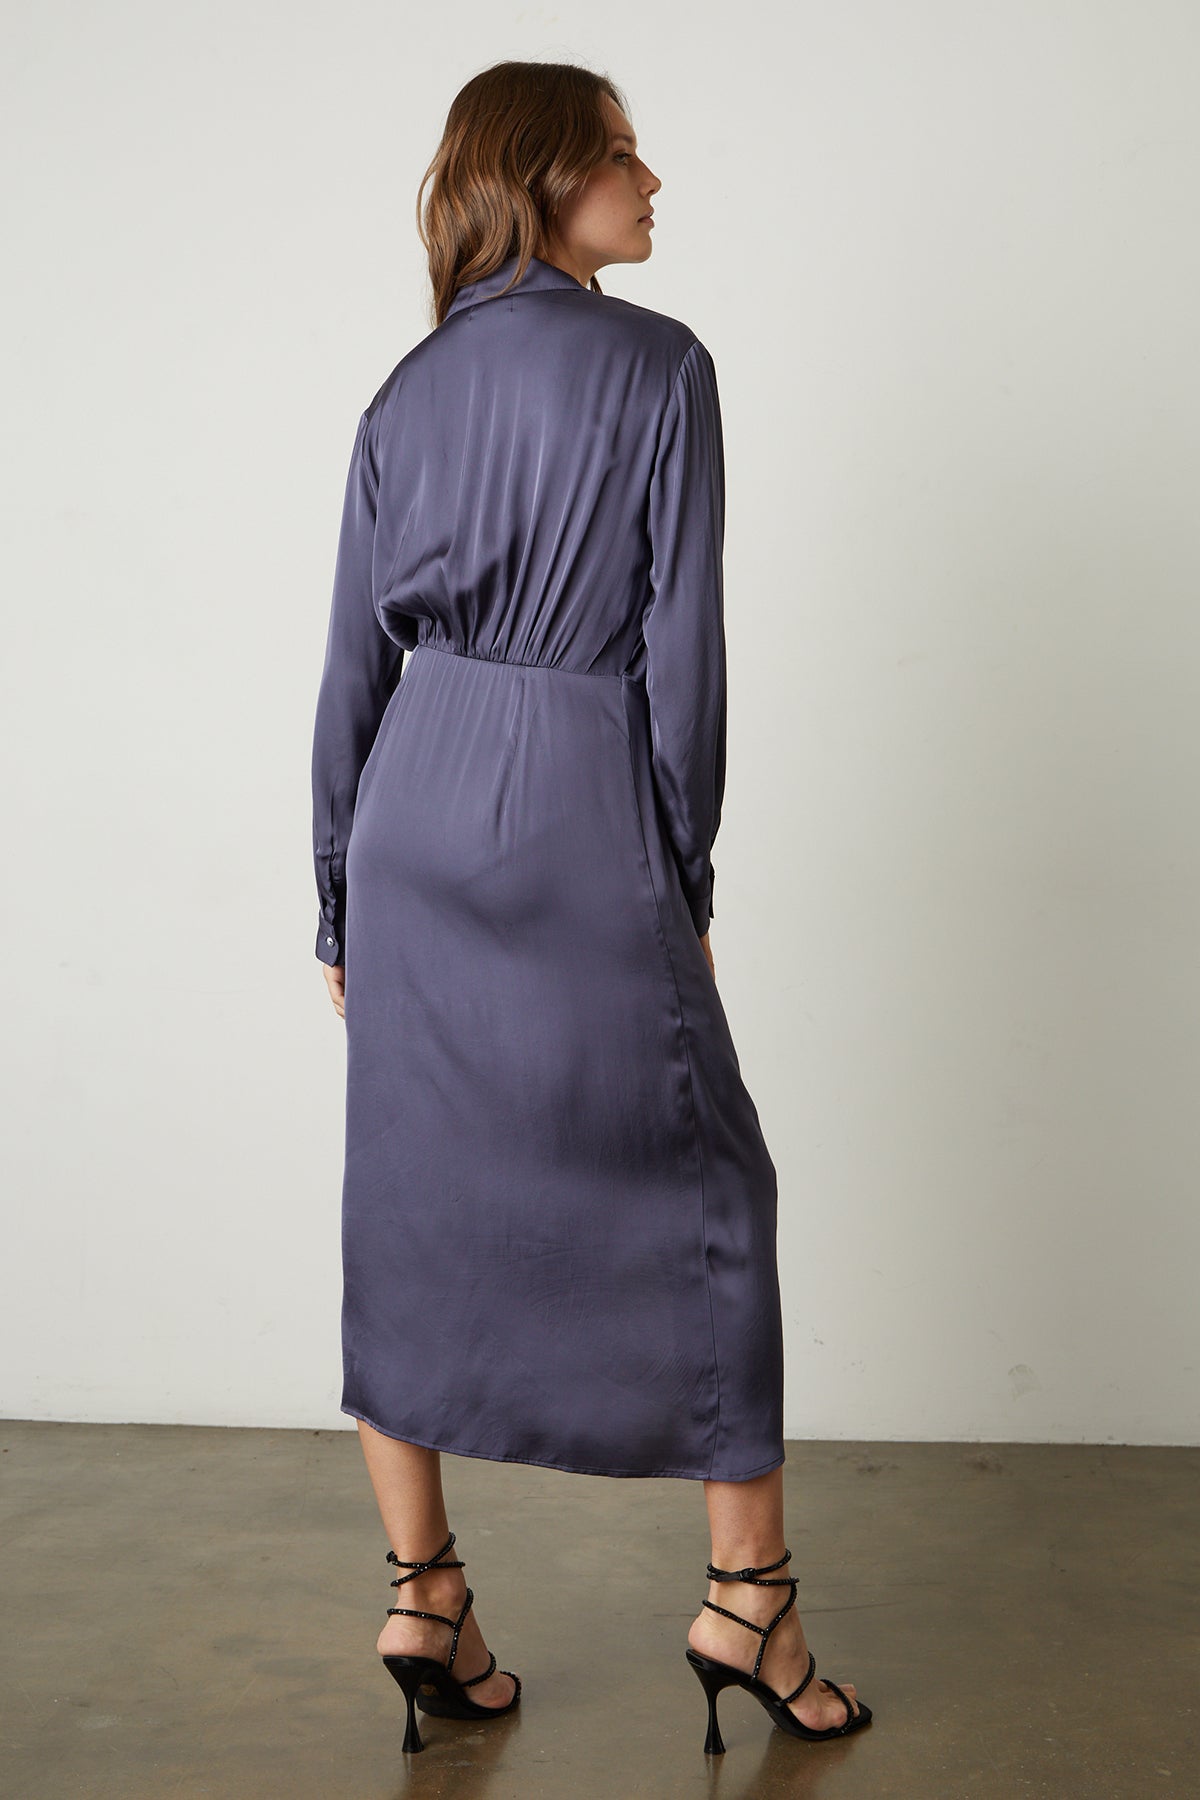 Jovie Satin Wrap Dress in steel full length back-25745201135809